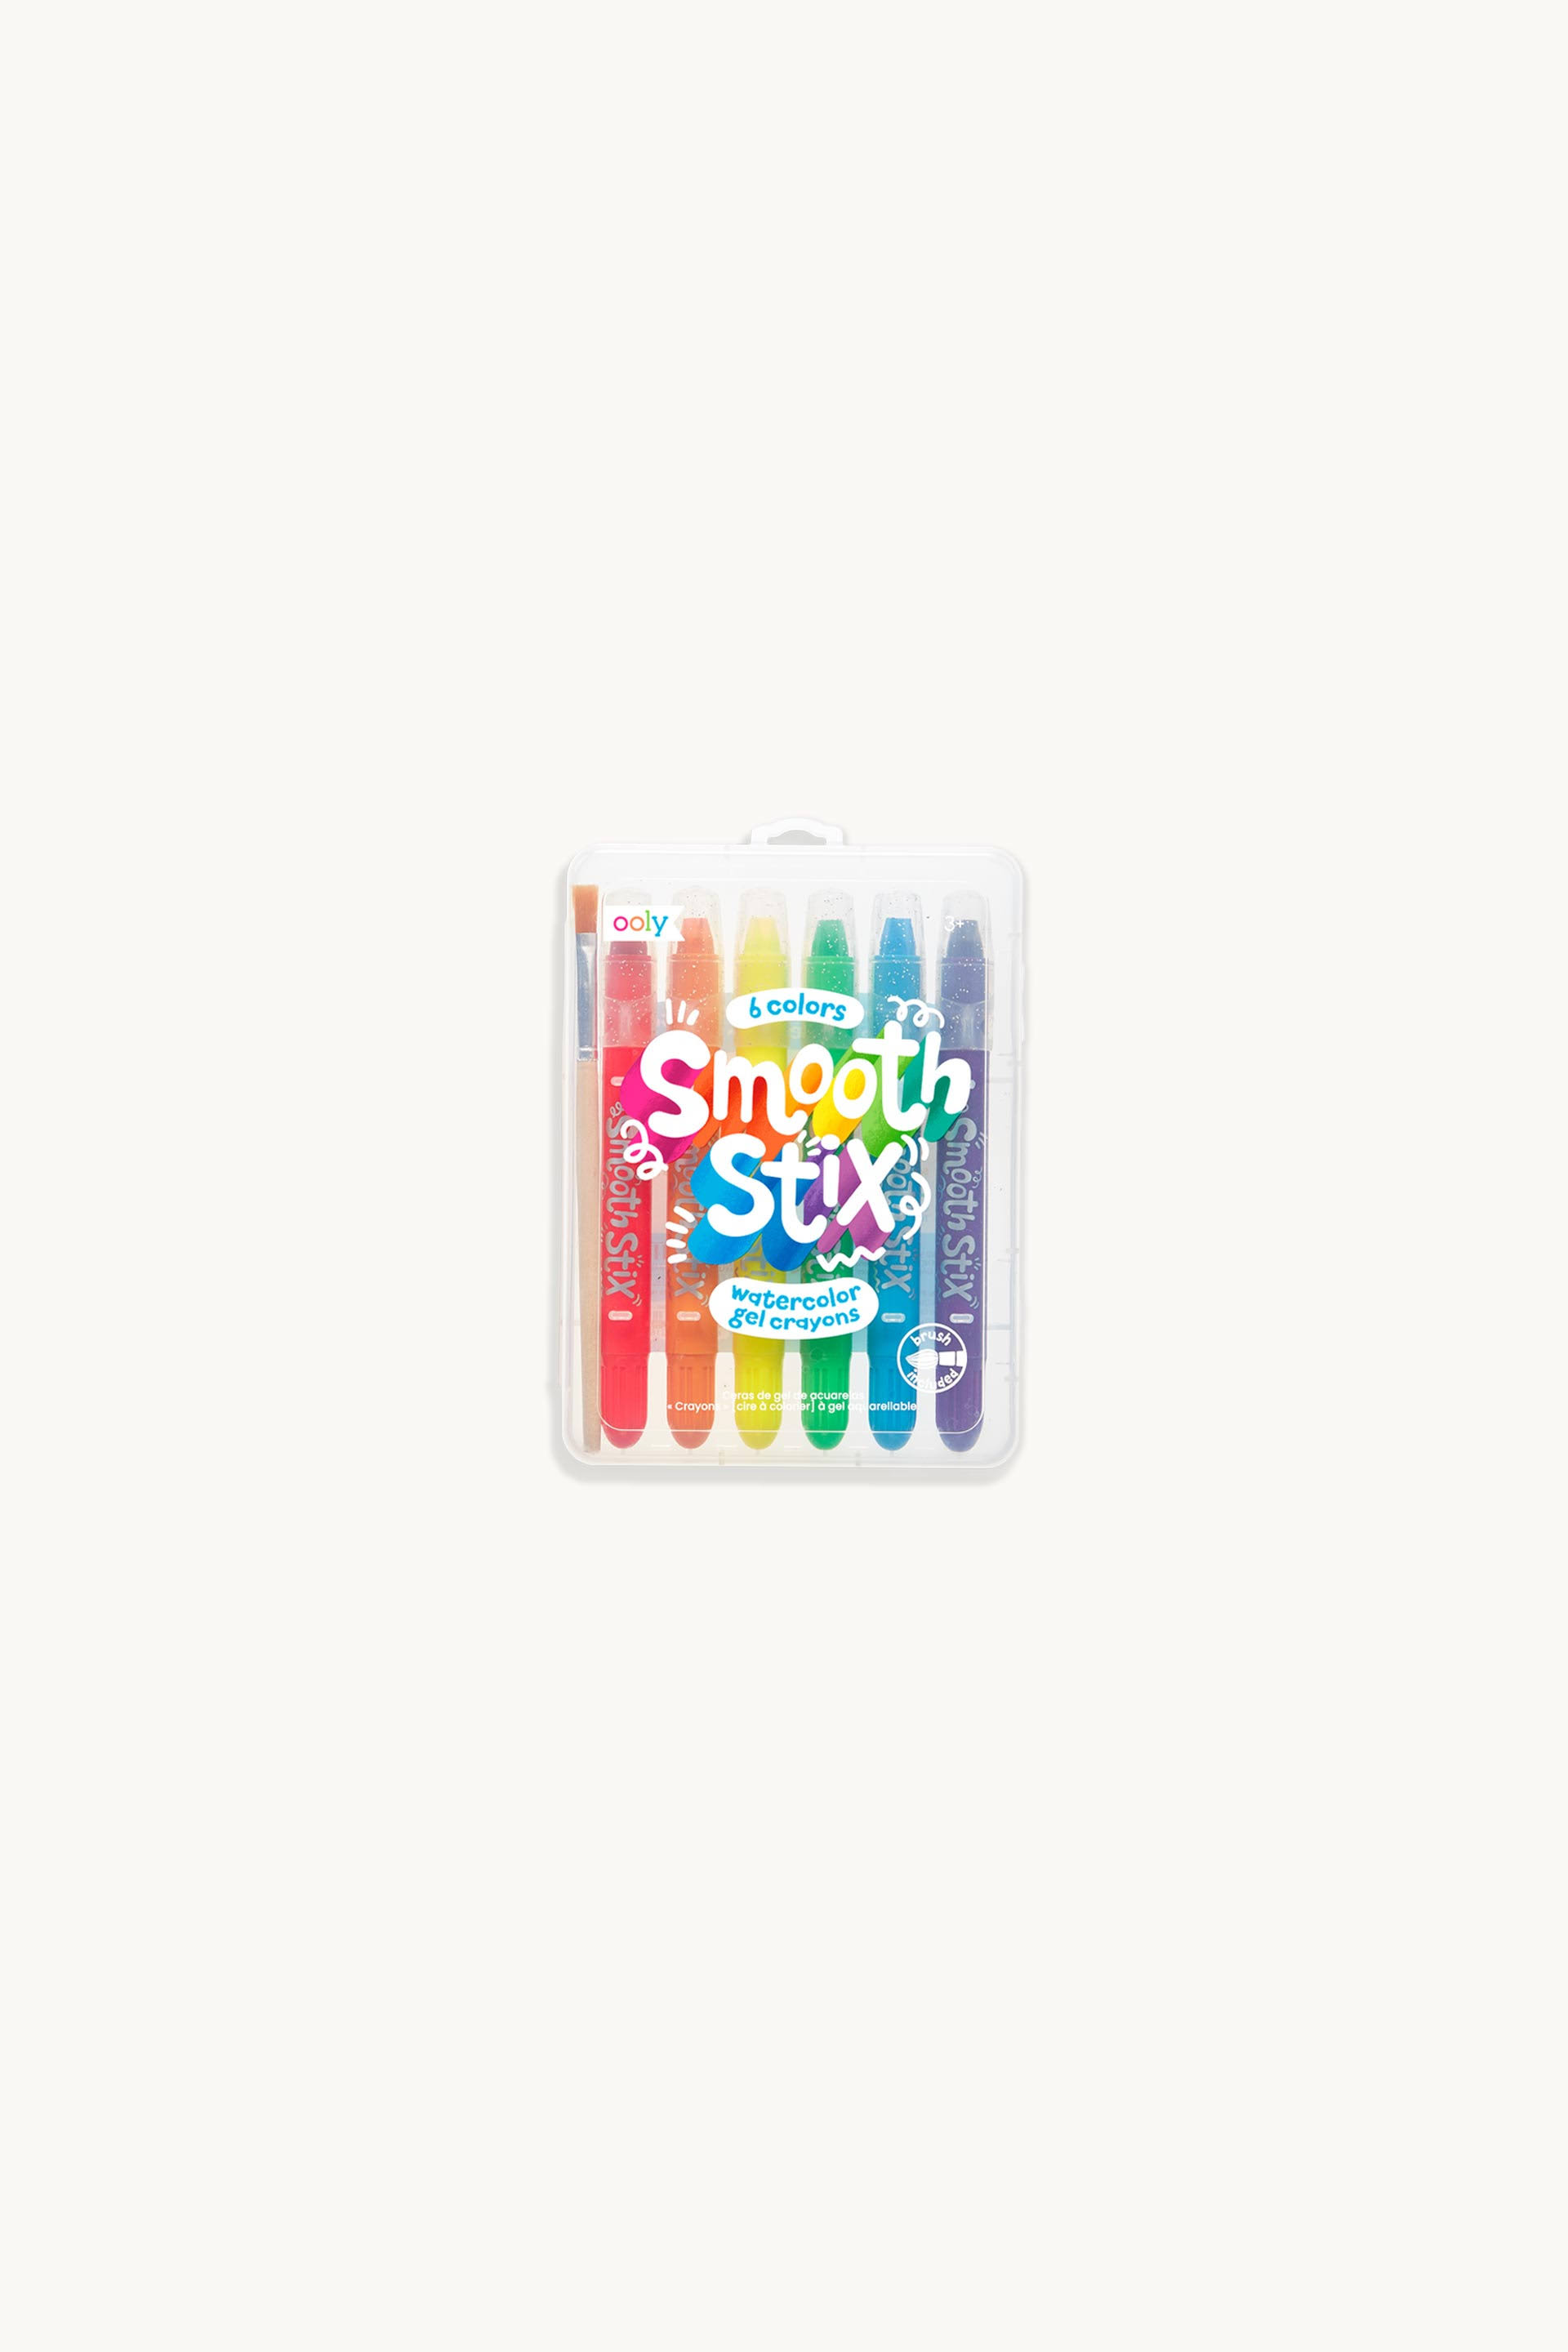 Ooly Smooth Stix Watercolor Gel Crayons - set of 6